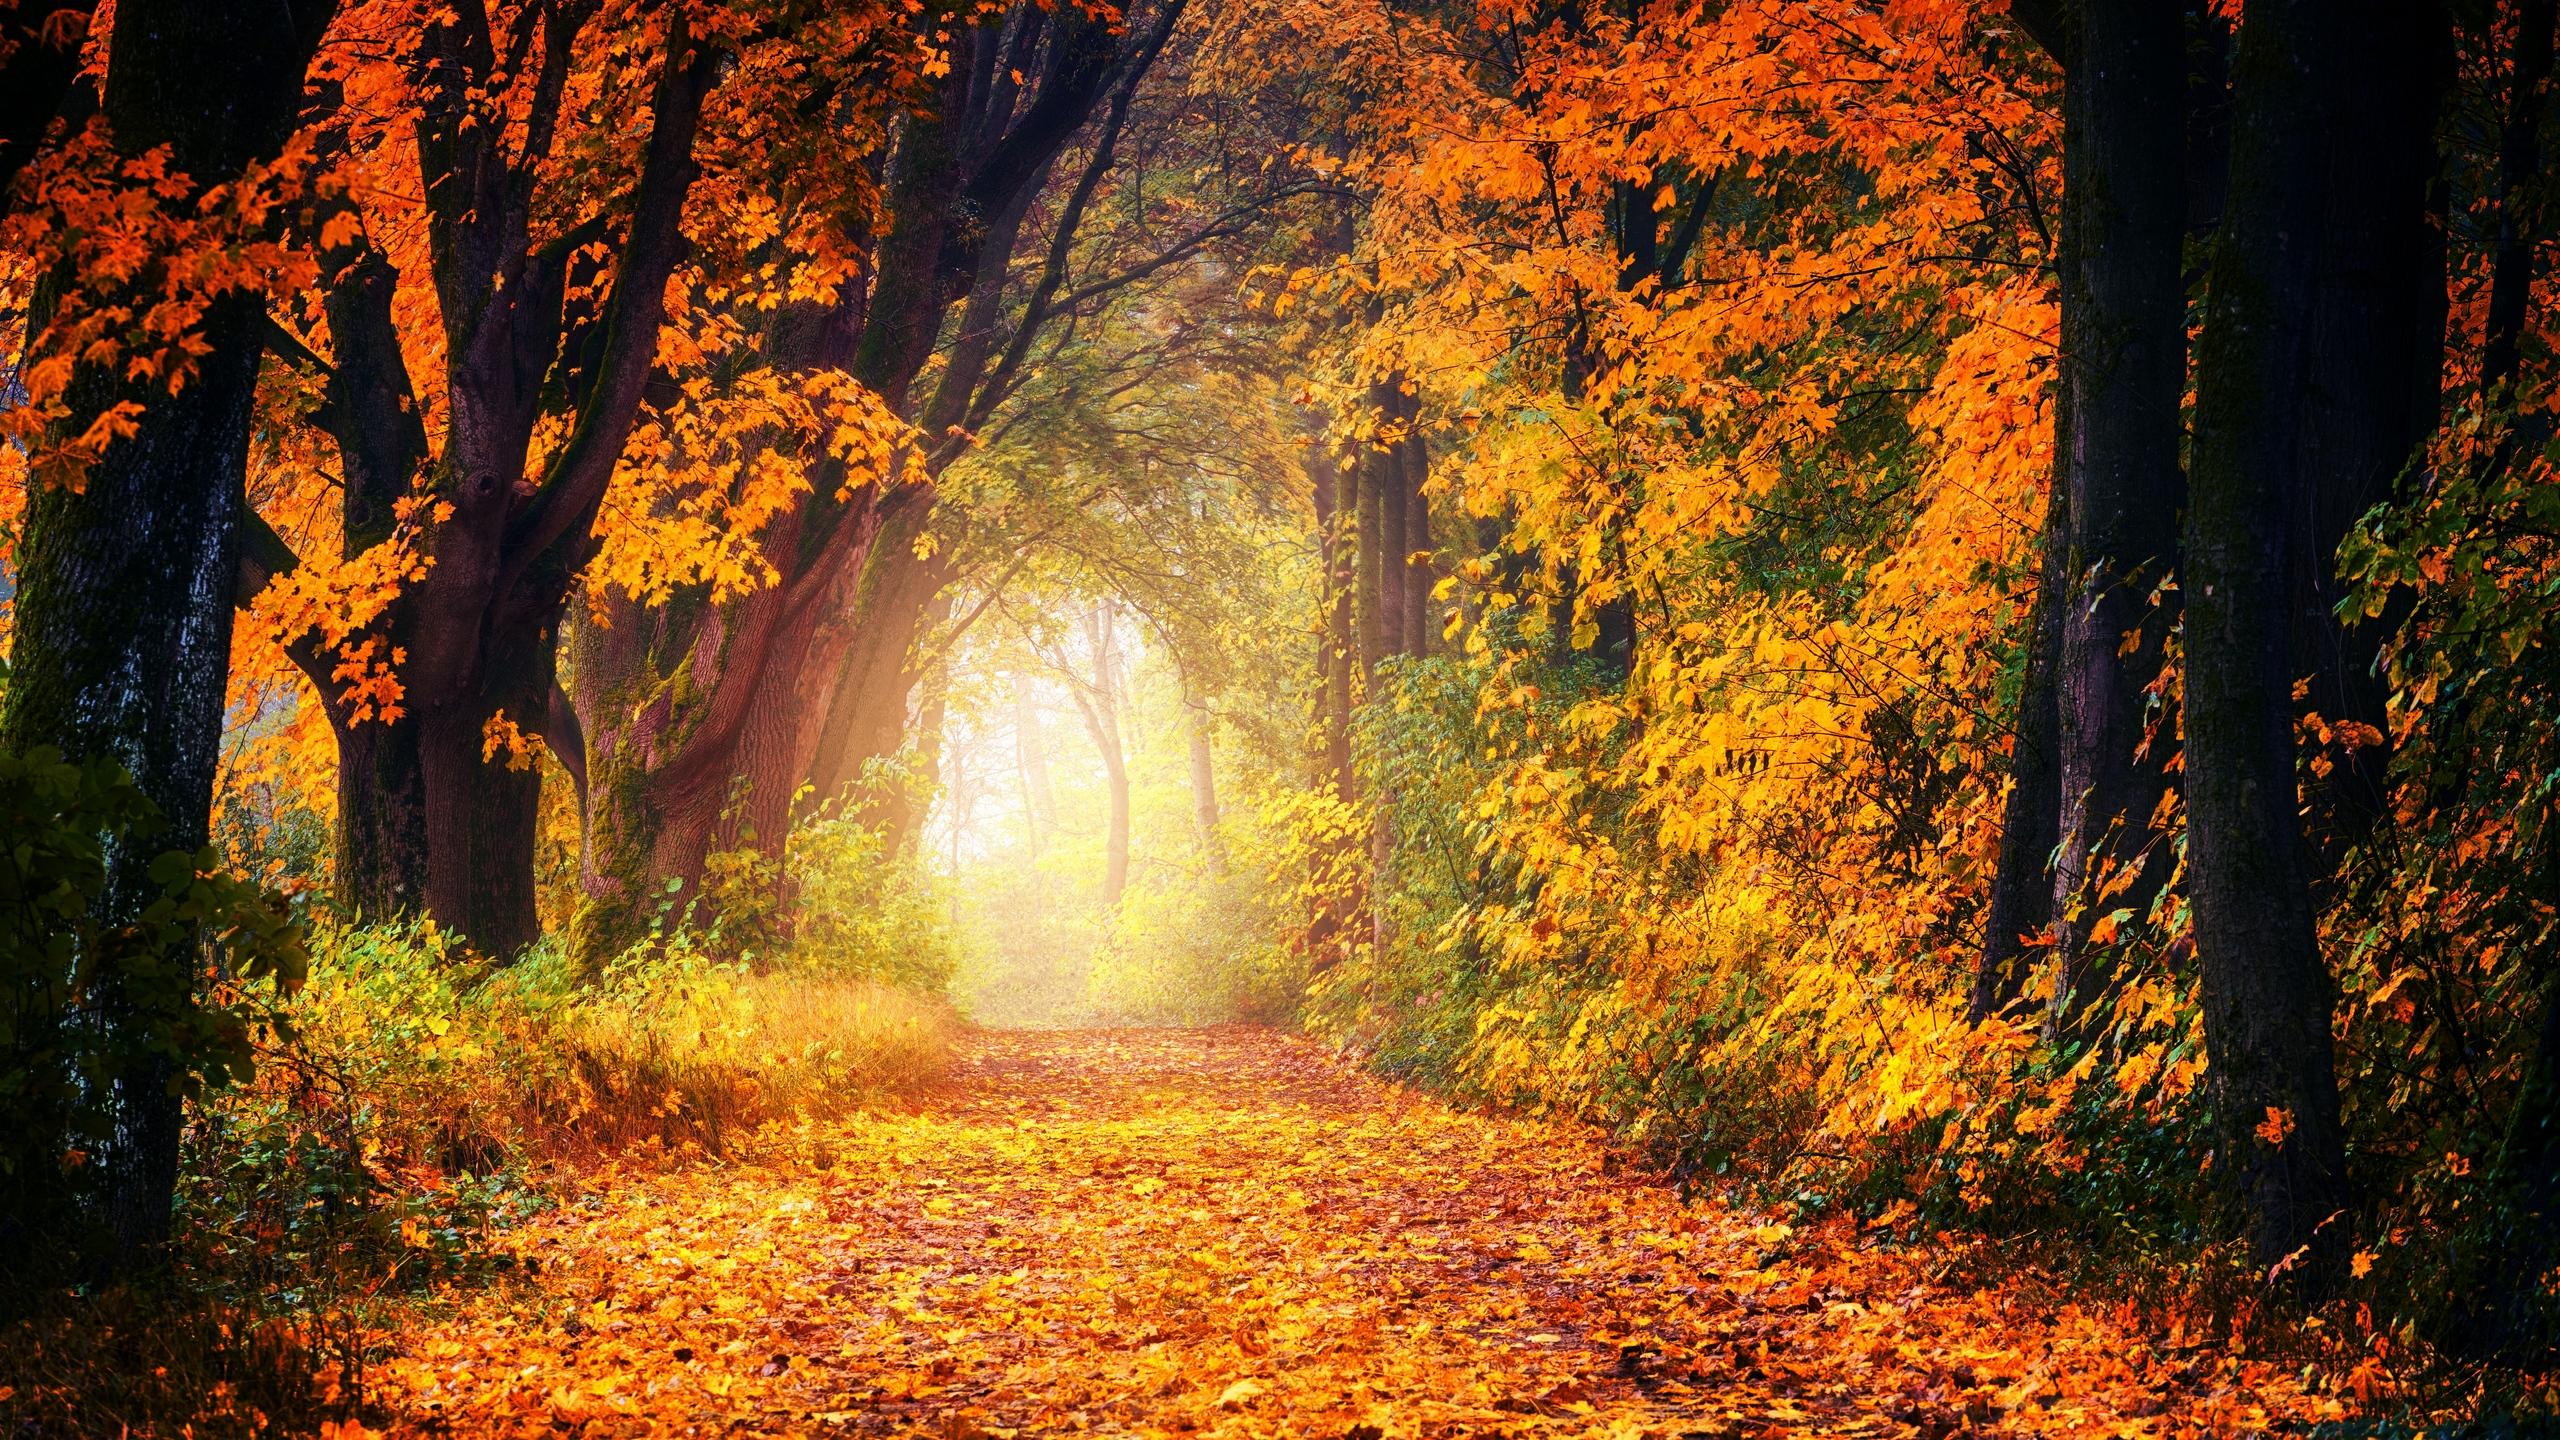 Download wallpaper 2560x1440 autumn, park, foliage, trees, path